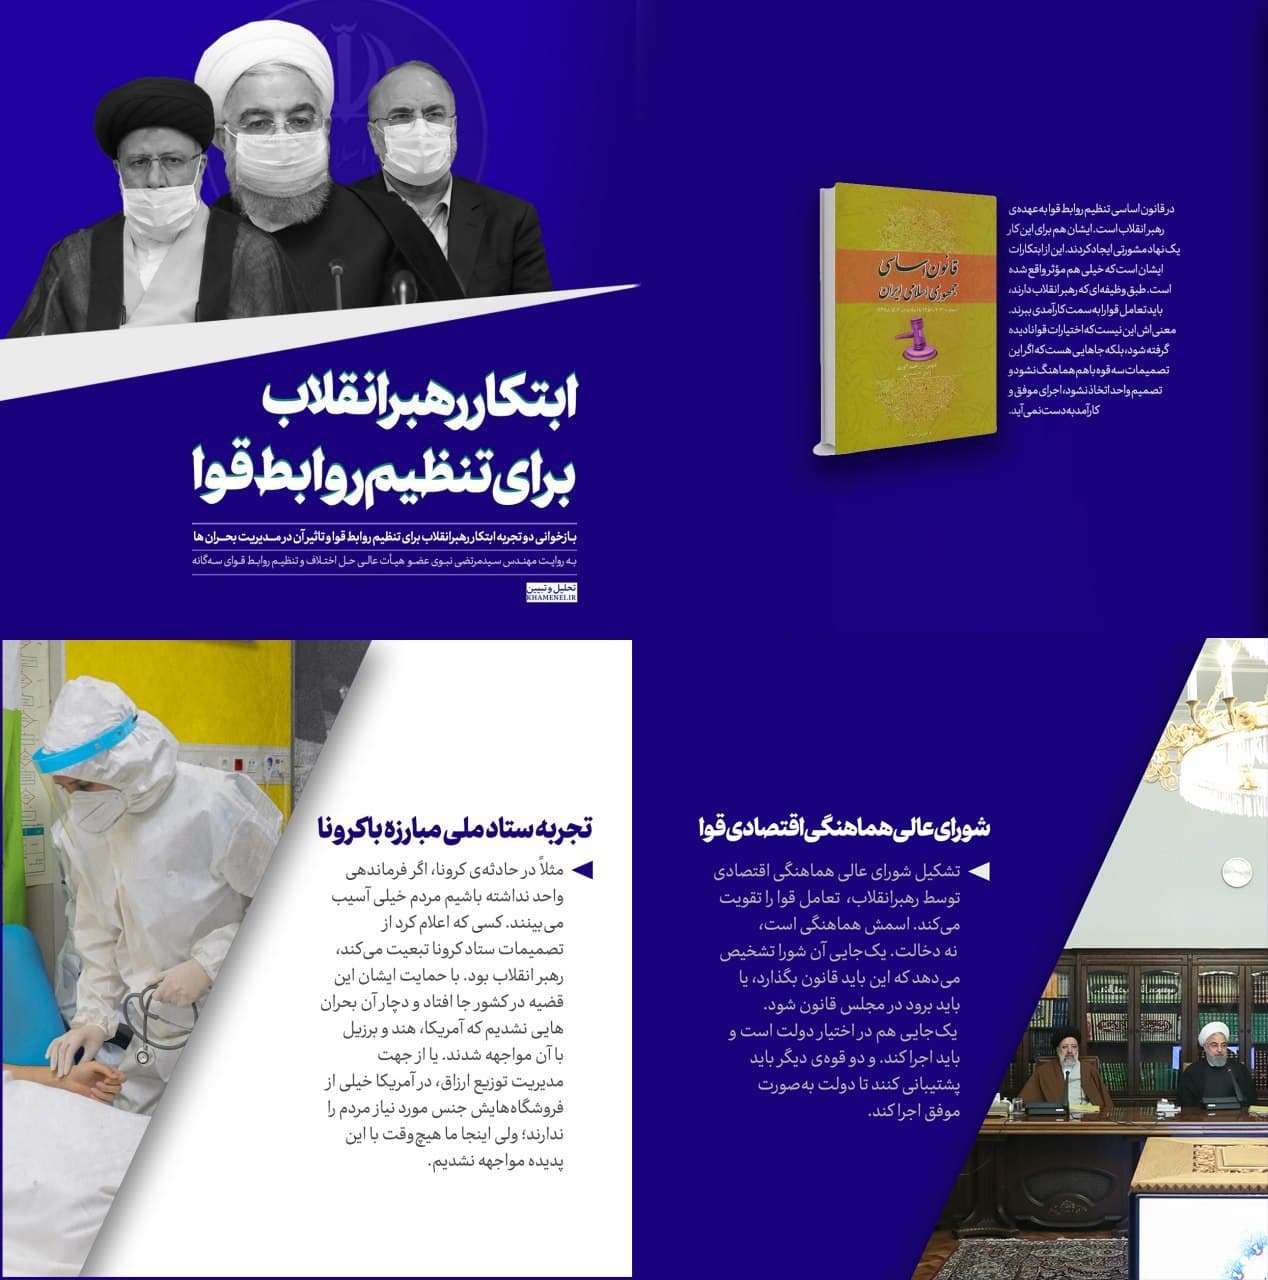 https://idc0-cdn0.khamenei.ir/ndata/news/46311/photo_2020-09-15_16-16-50.jpg